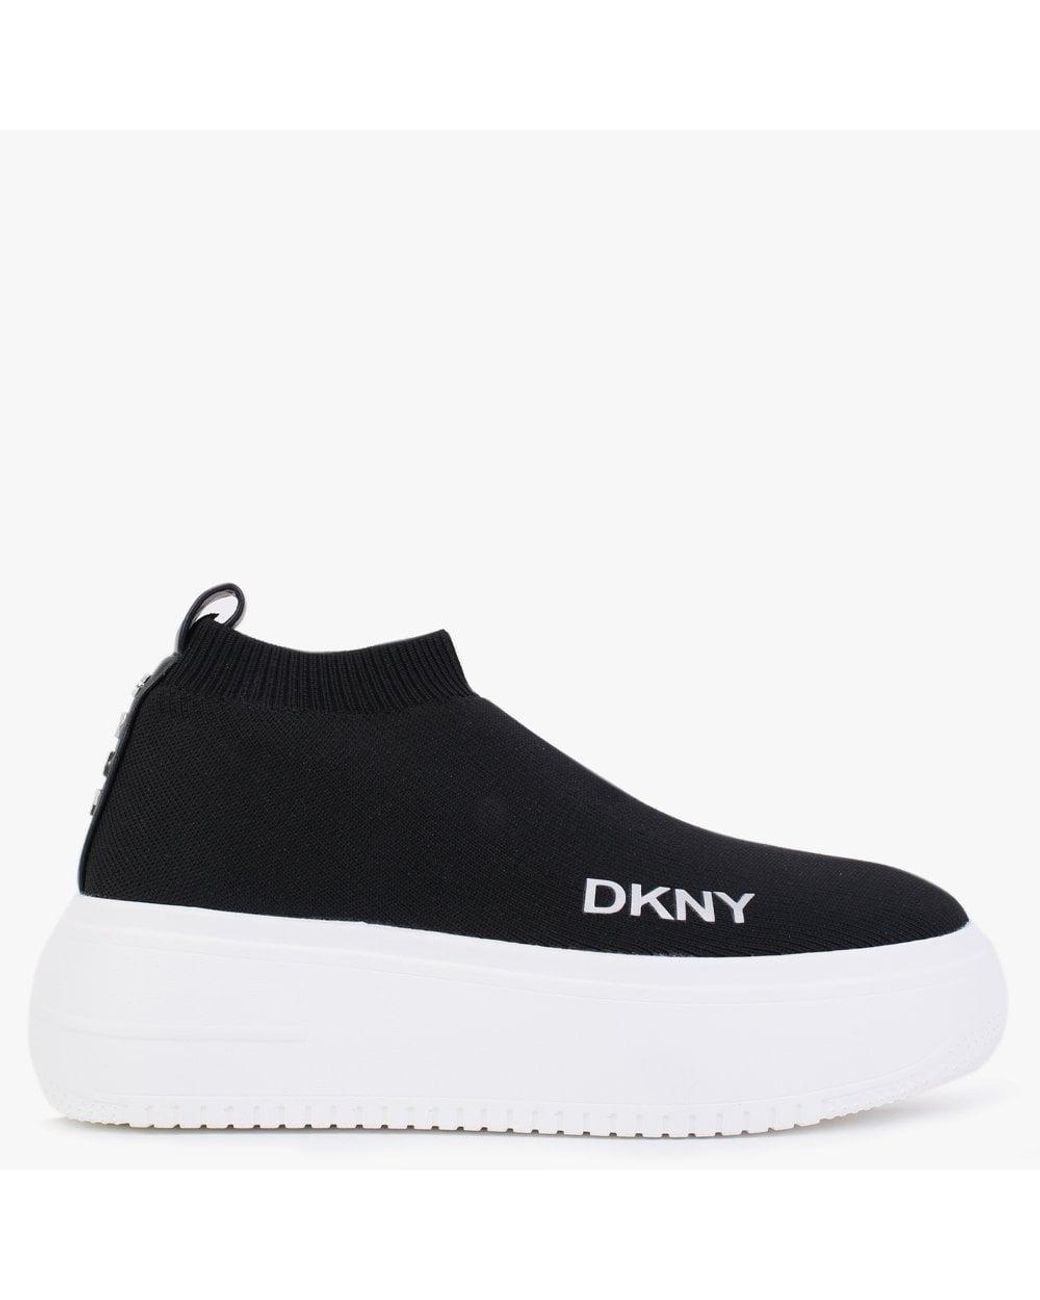 DKNY Mada Black Knitted Slip On Trainers | Lyst Australia